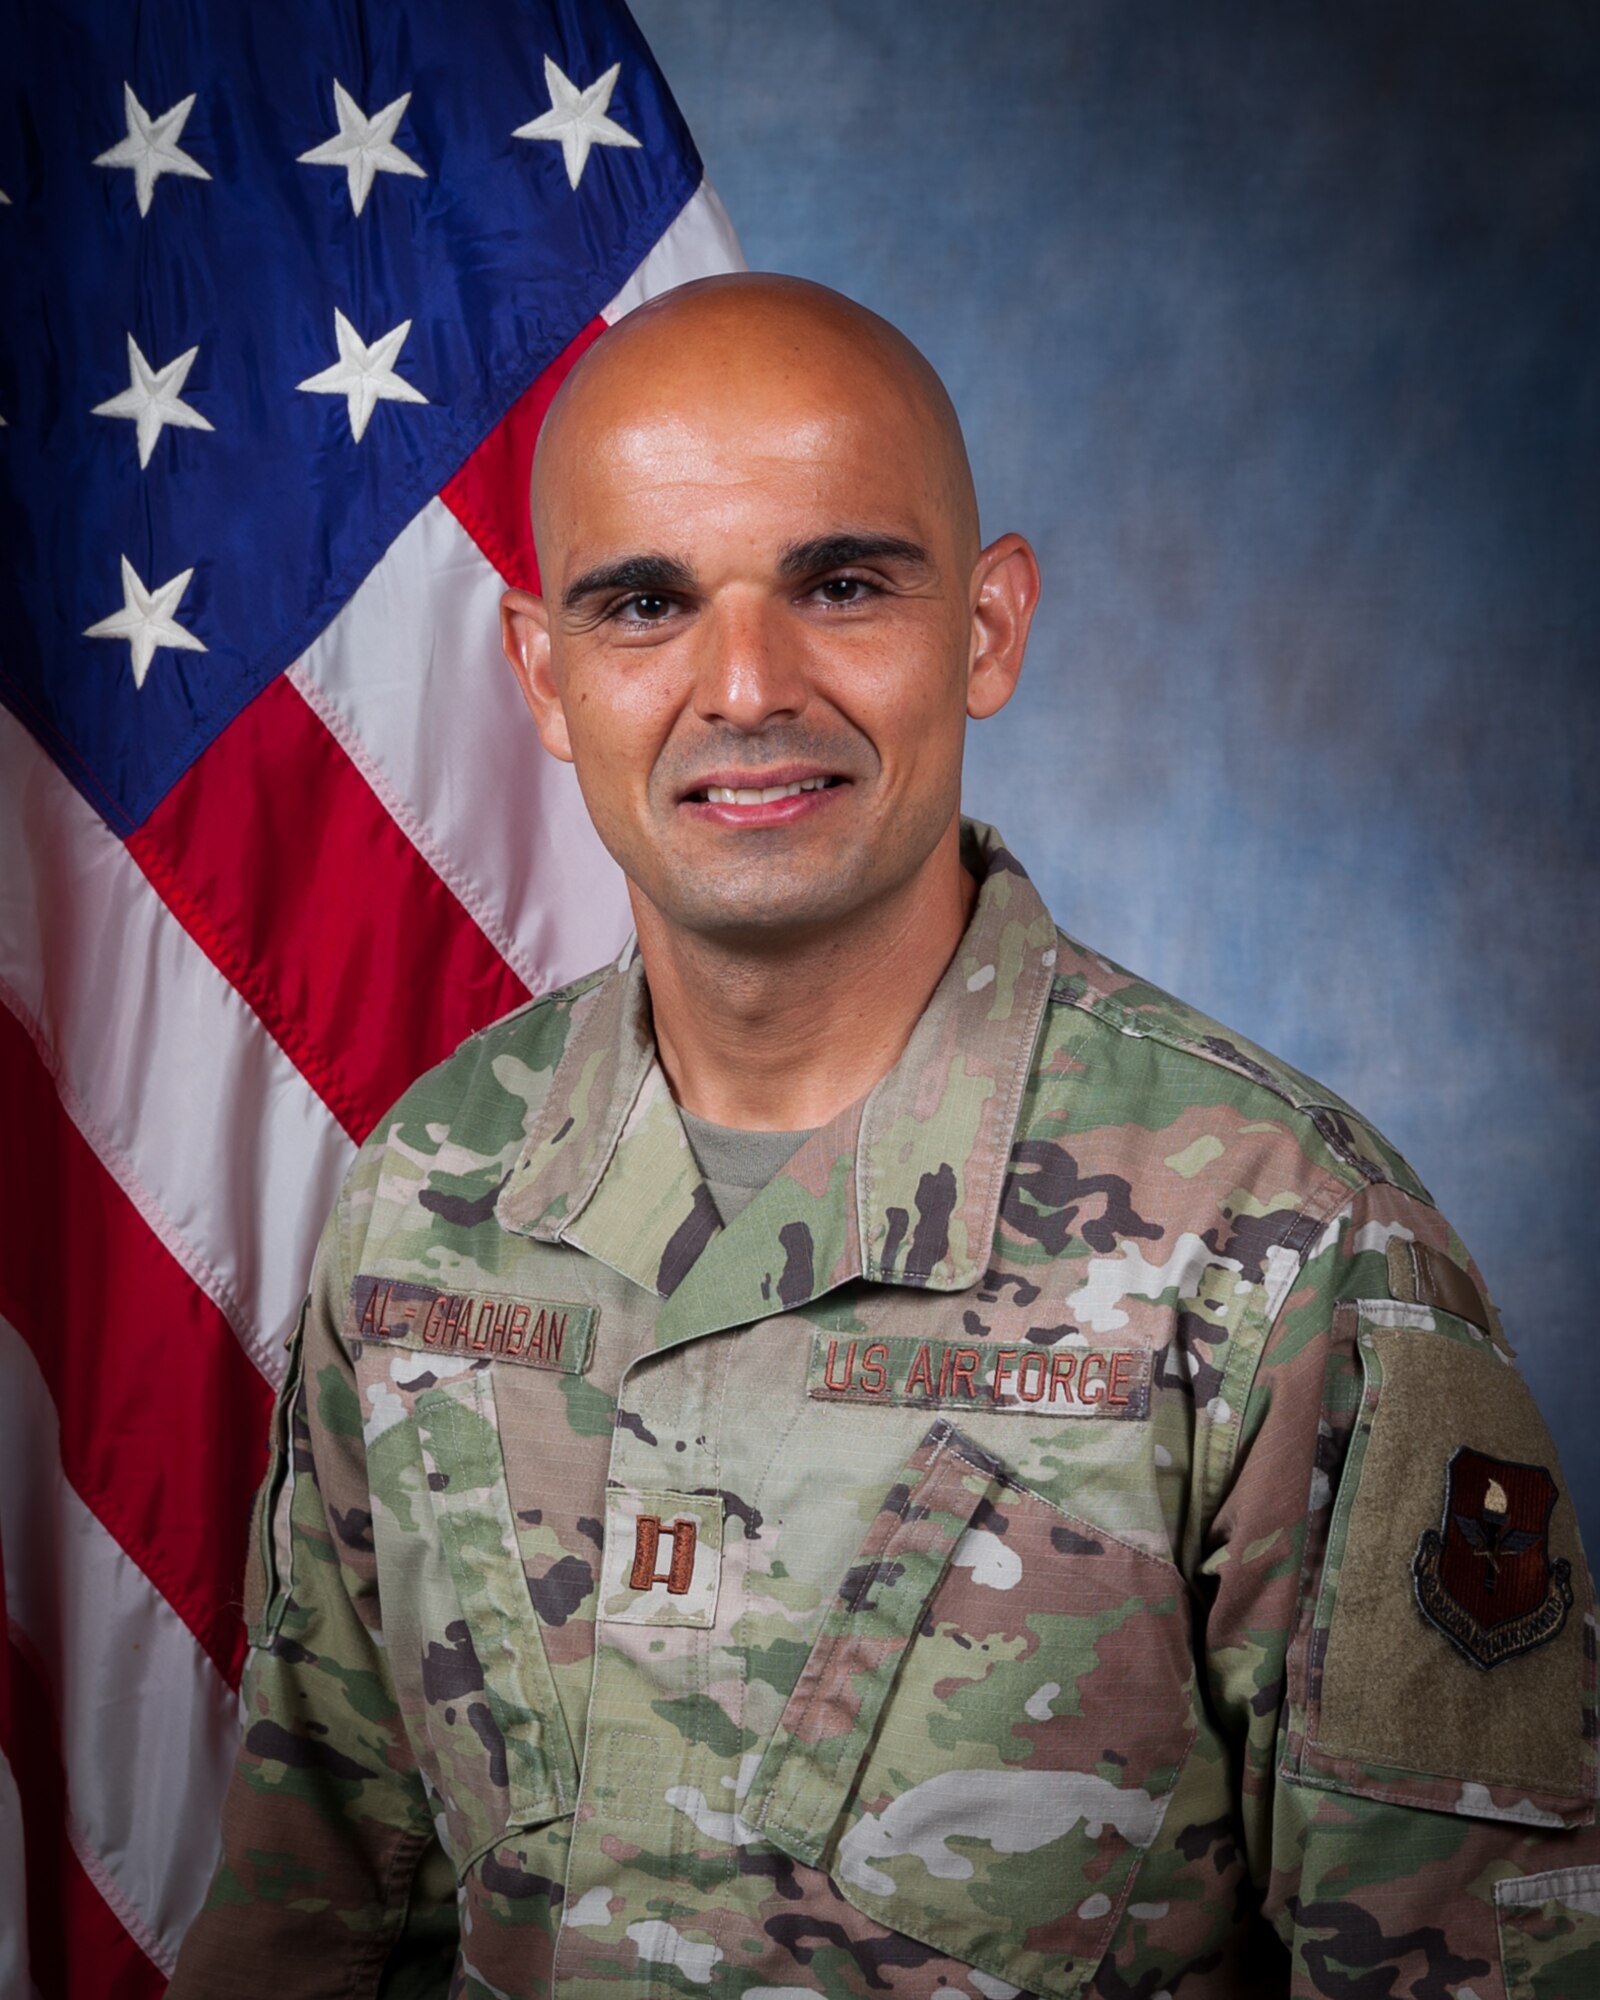 U.S. Air Force Capt. Ahmed Alghadhban, 56th Operational Readiness Squadron bioenvironmental engineer, was born in Karbala, Iraq.